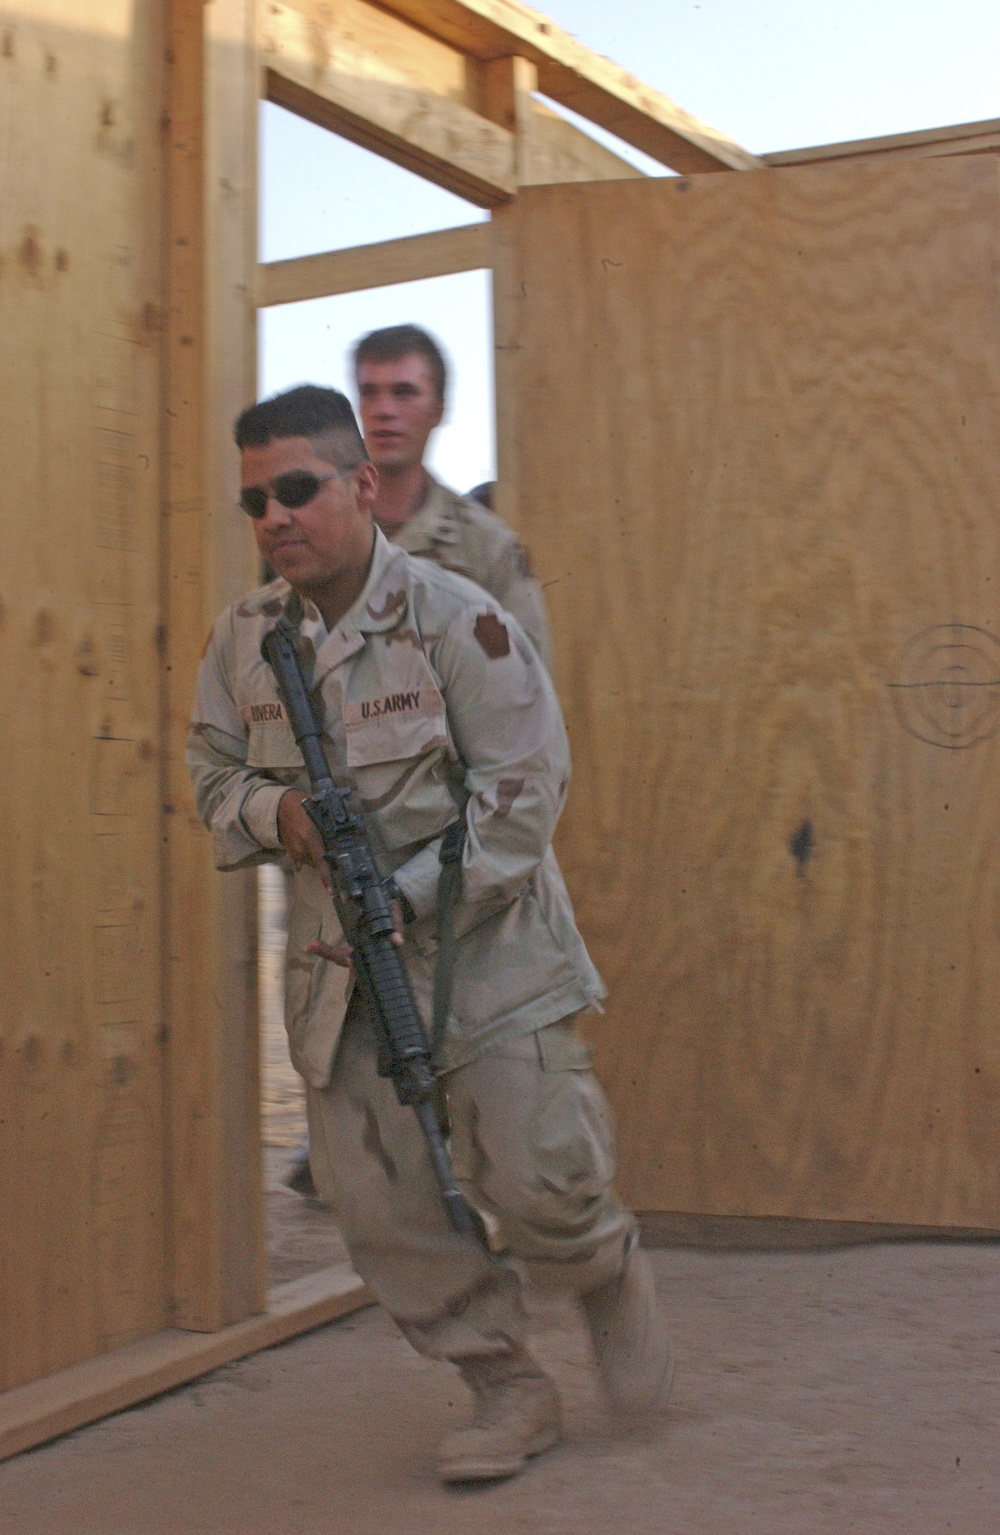 Soldiers practices entering the door of a mock home